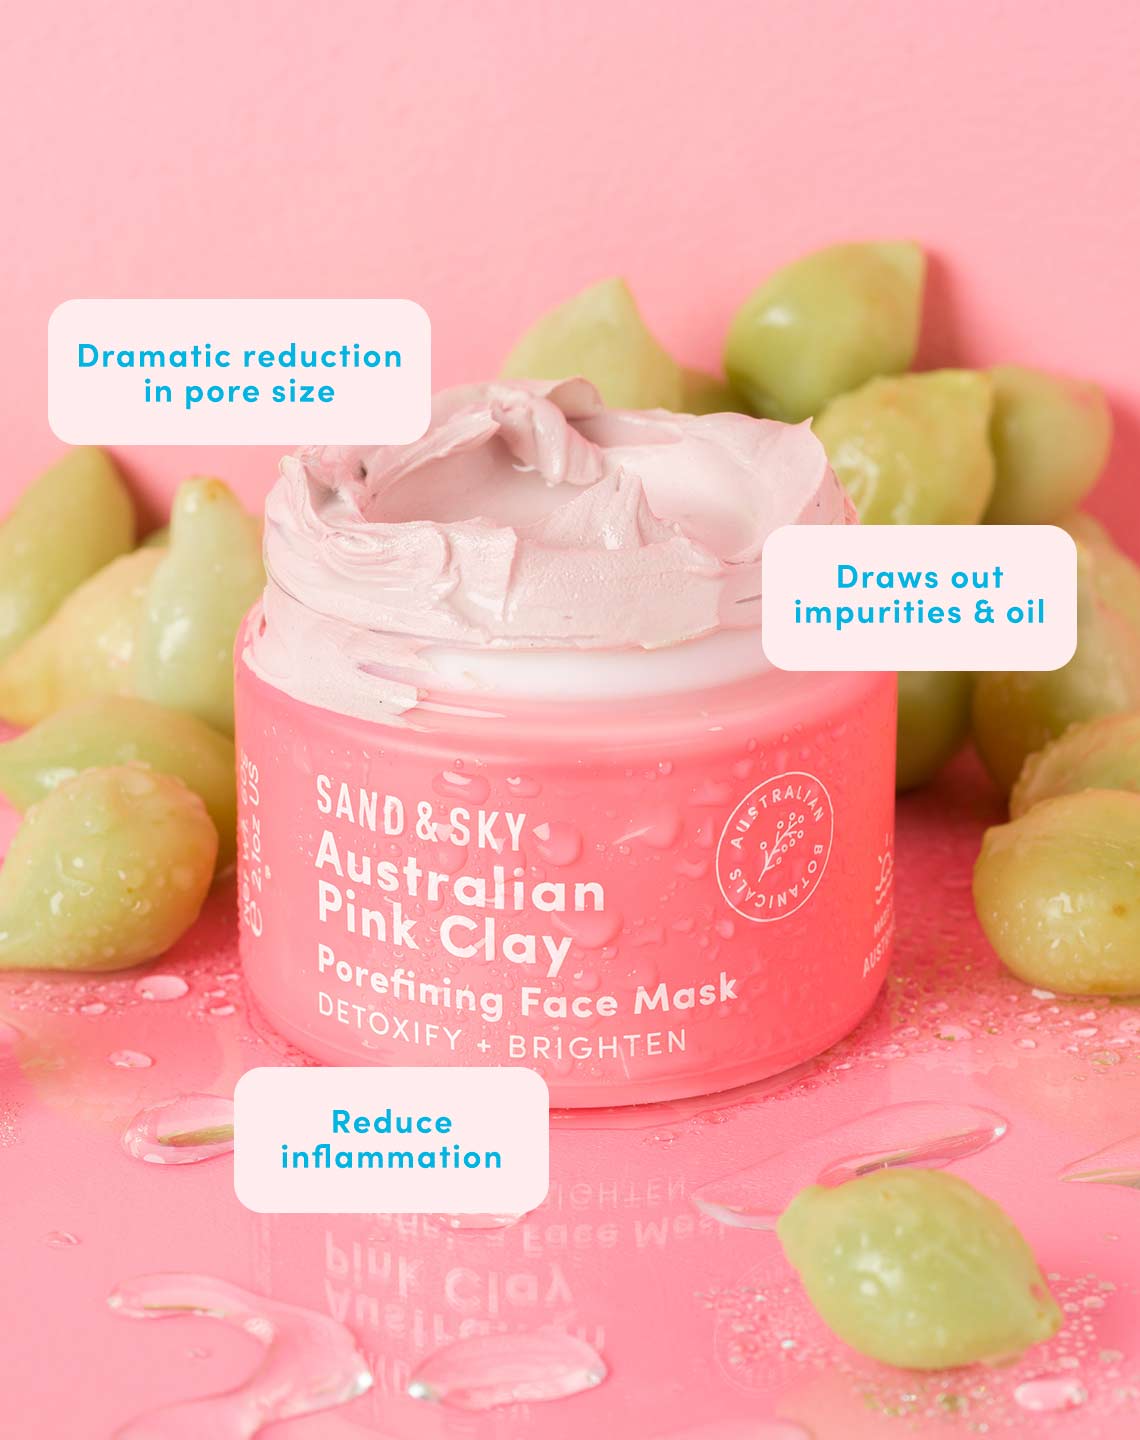 Australian Pink Clay Pore Tight Kit.